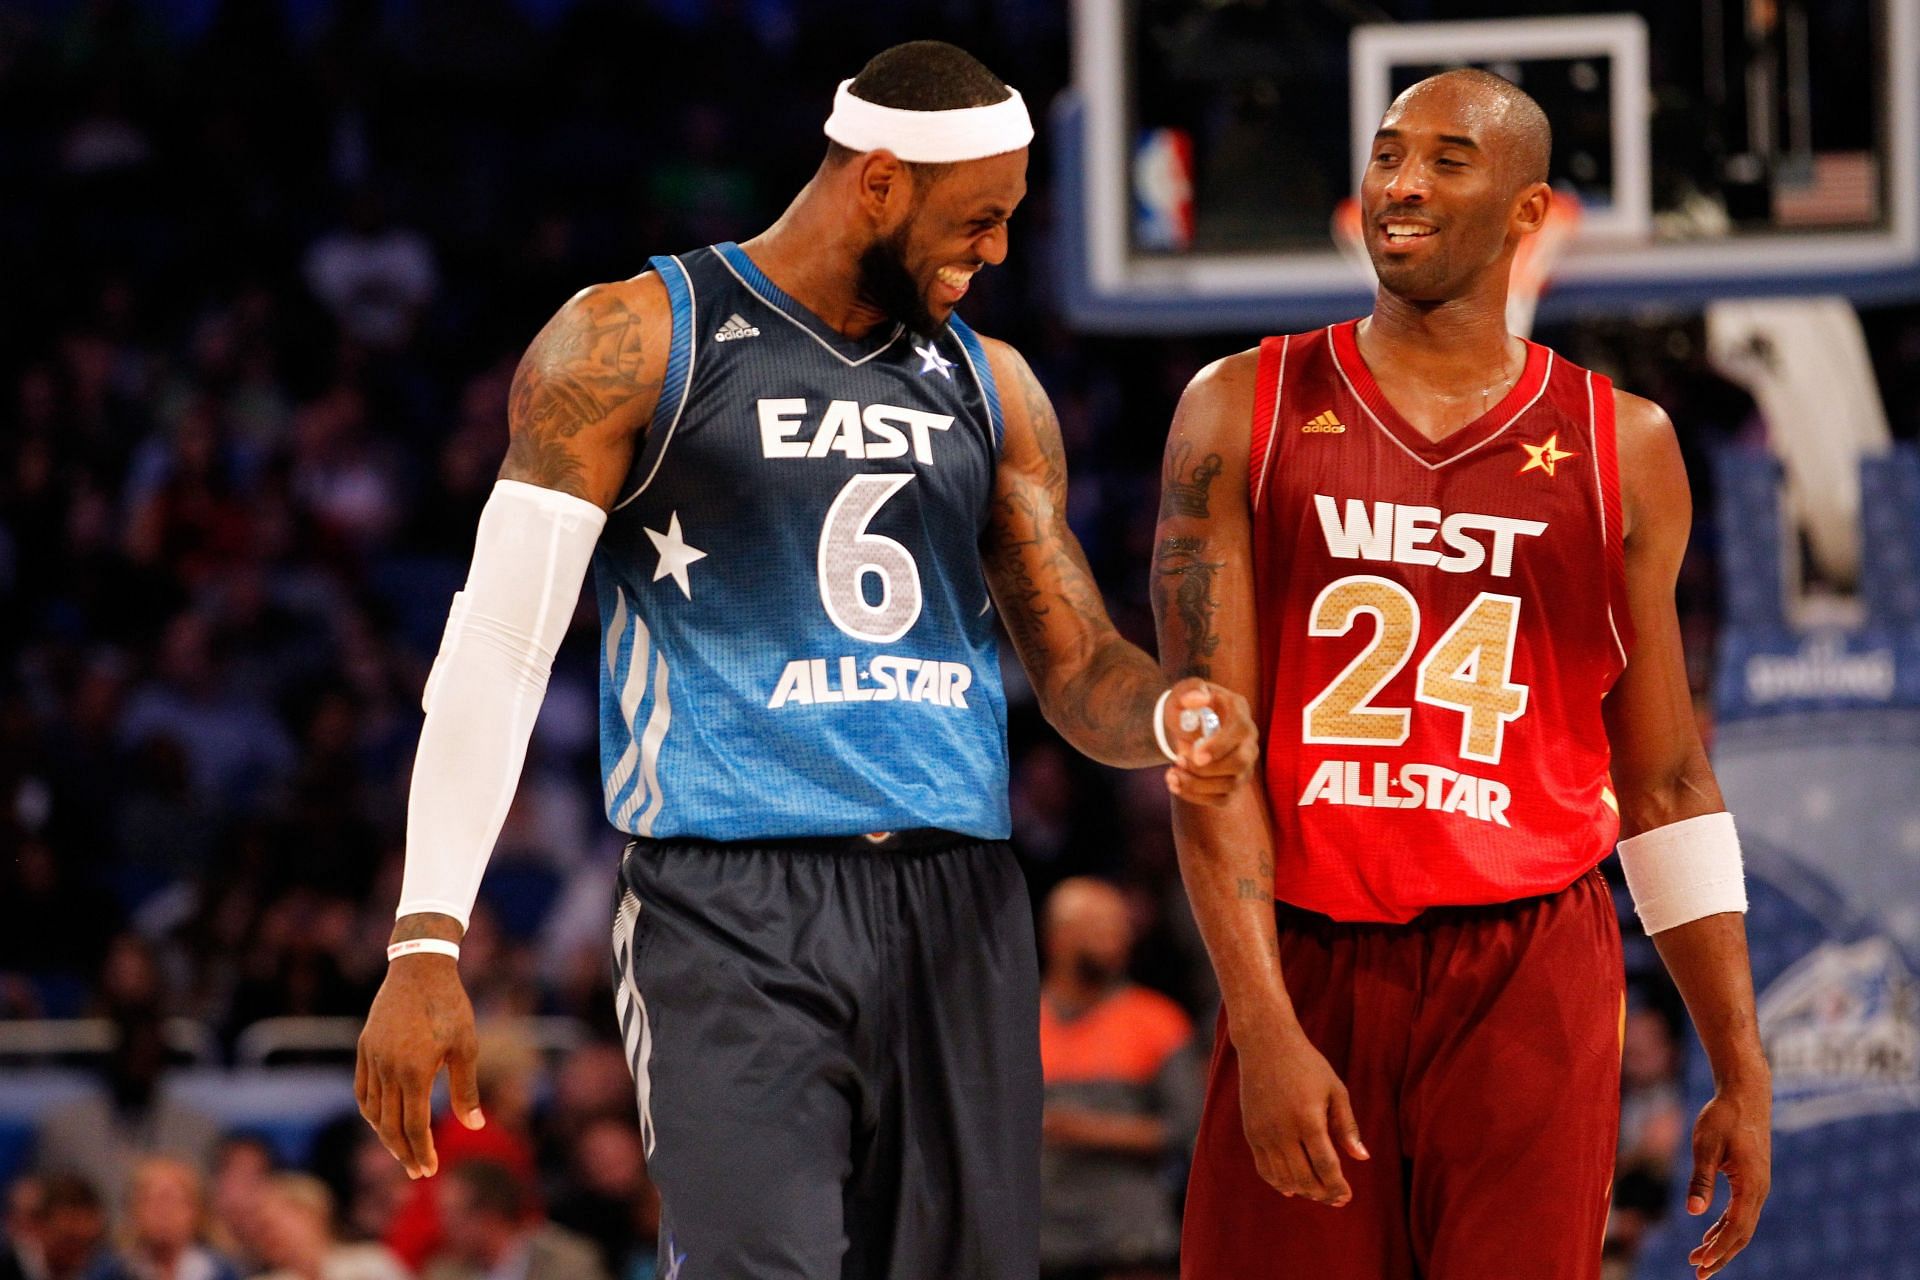 LeBron James and Kobe Bryant back at the 2012 NBA All-Star Game